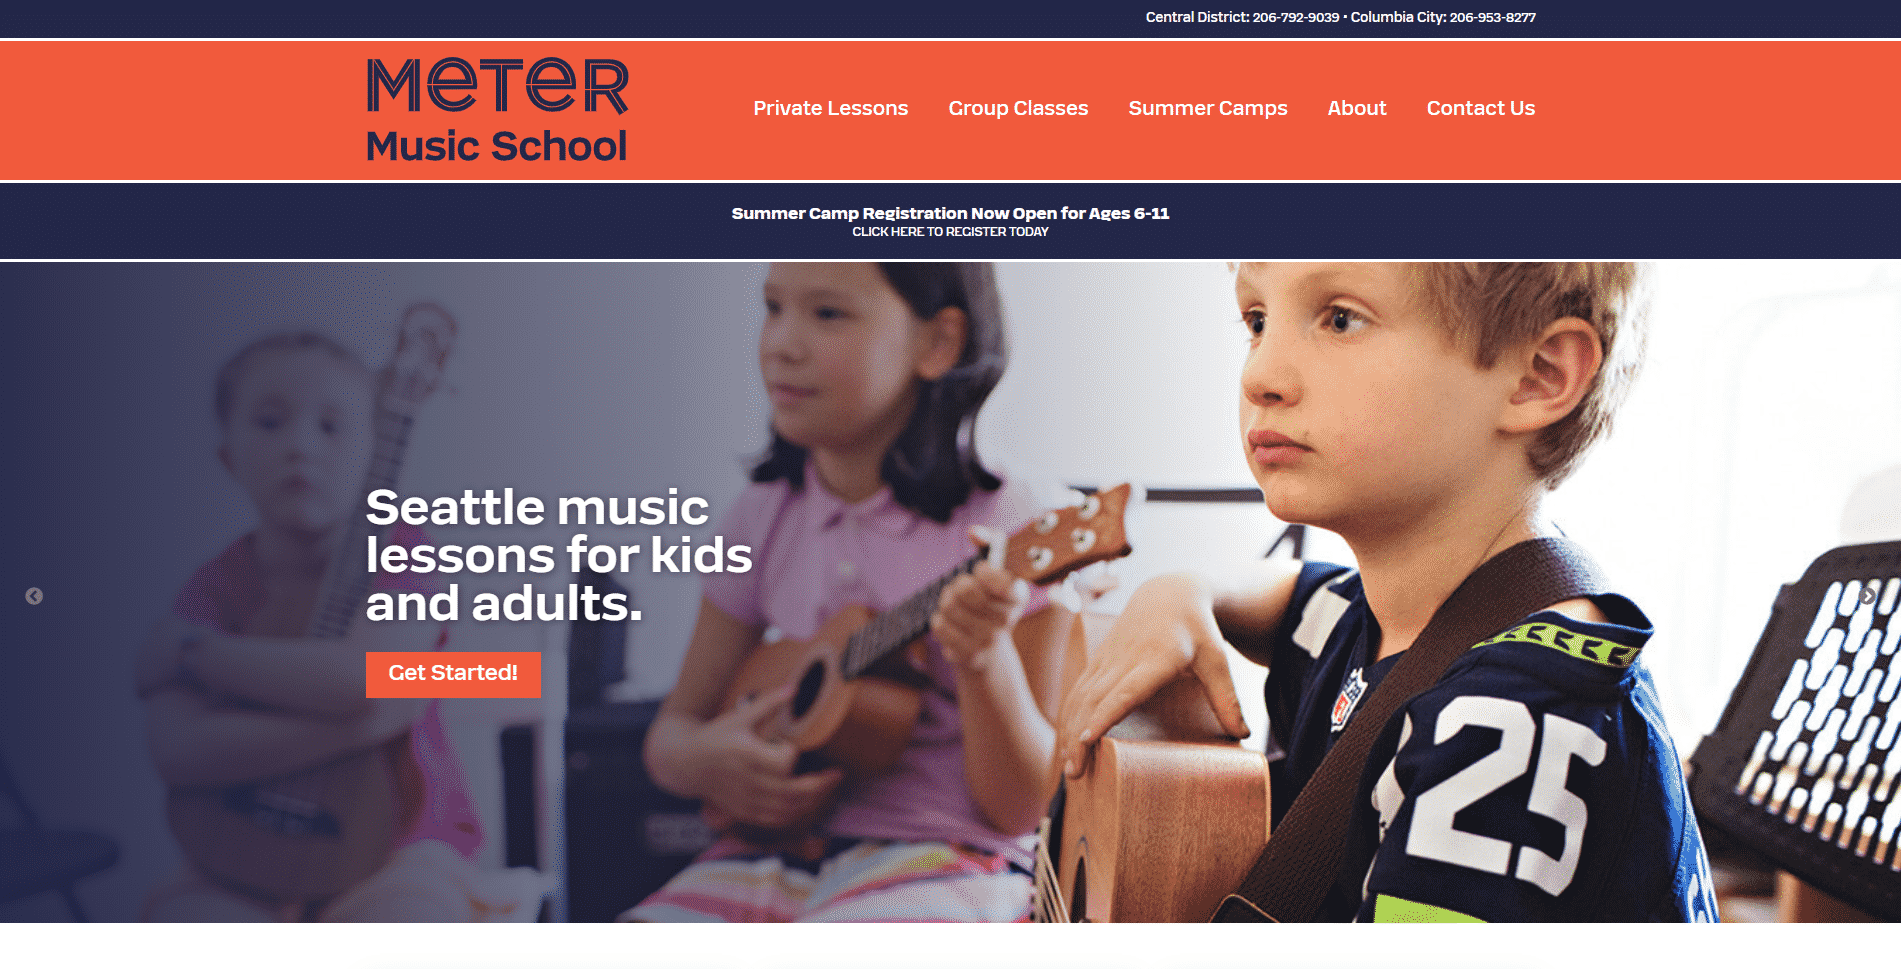 Meter Music School